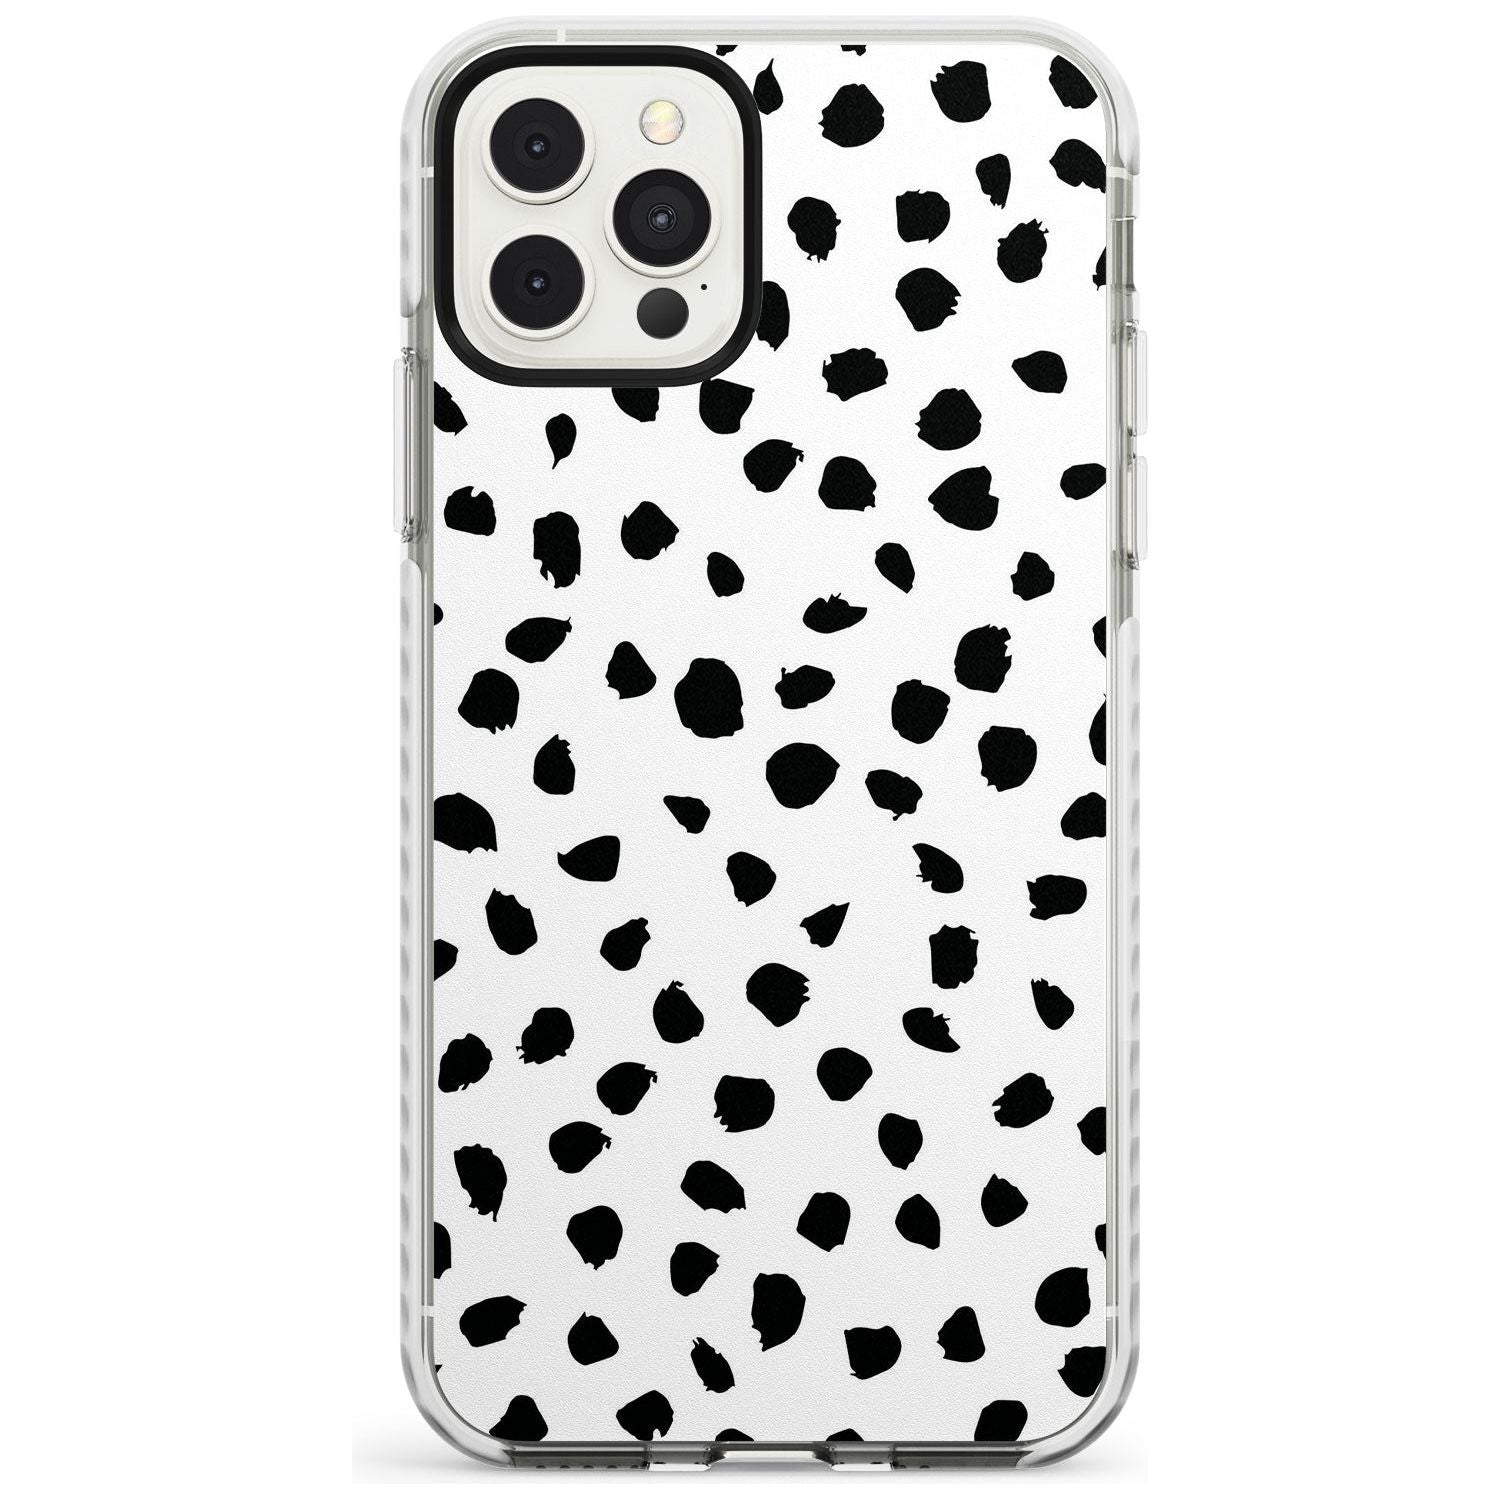 Dalmatian Print Slim TPU Phone Case for iPhone 11 Pro Max